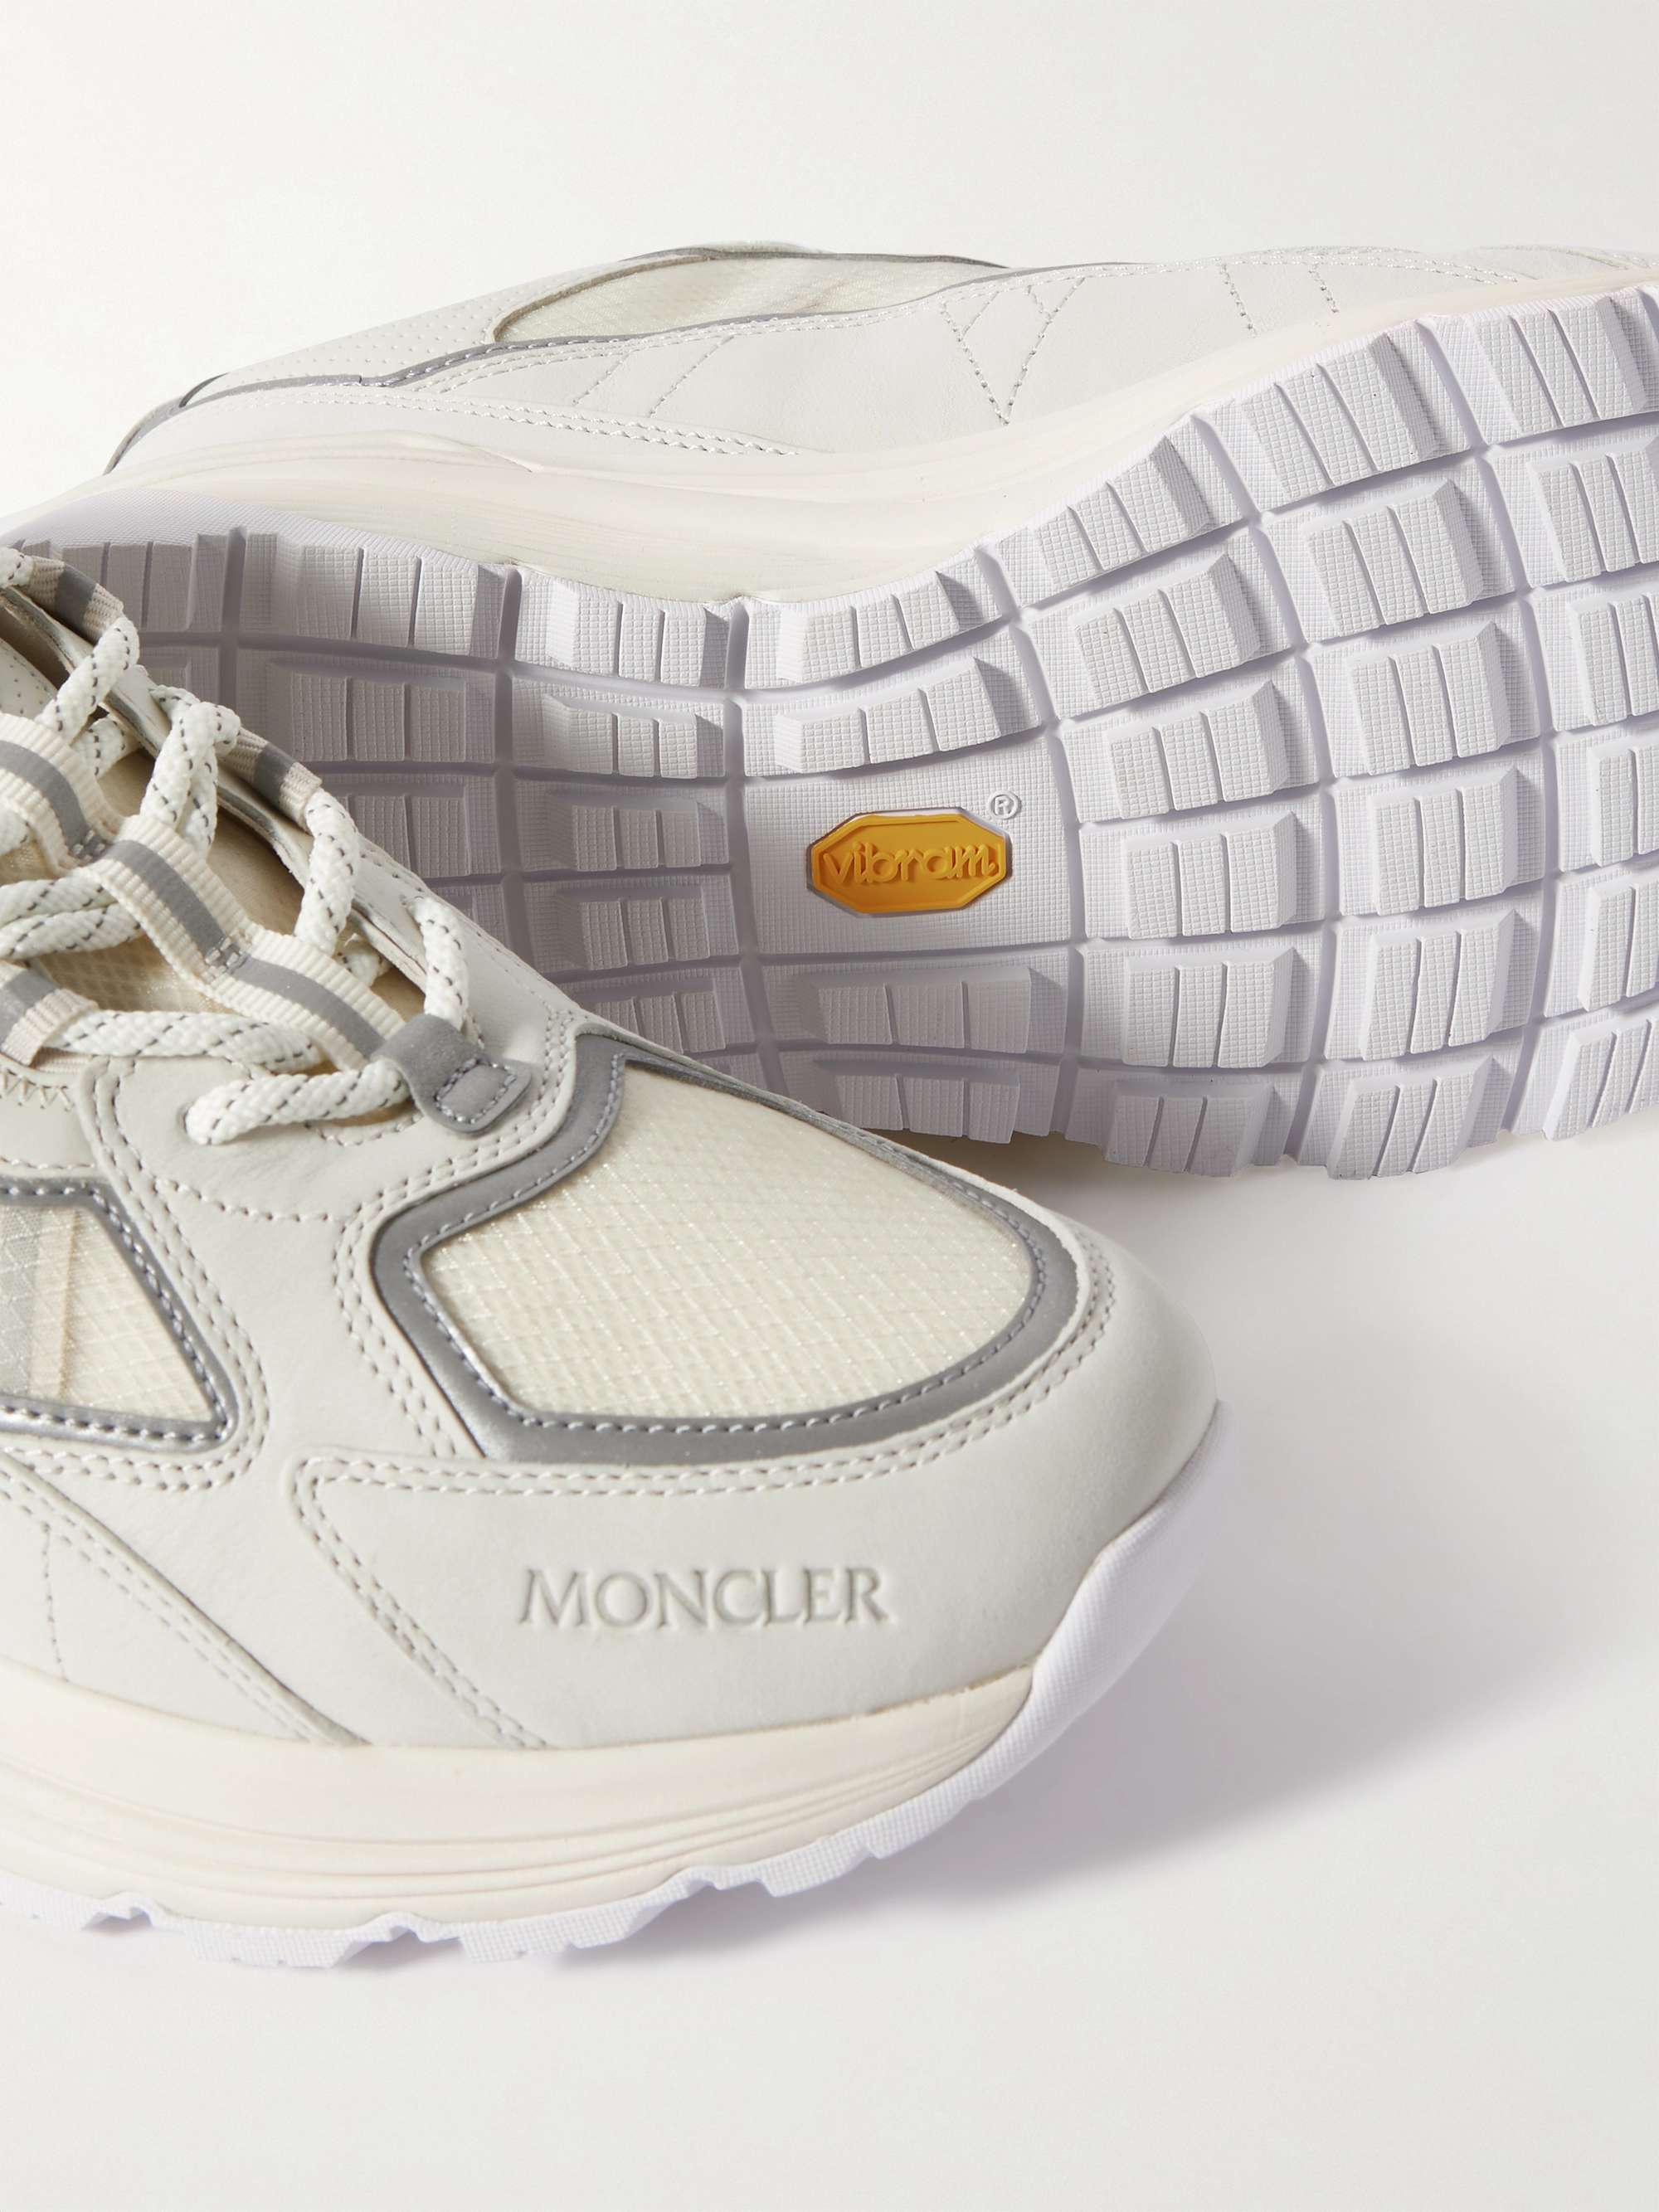 MONCLER Sneakers in camoscio, pelle e mesh Lite Runner